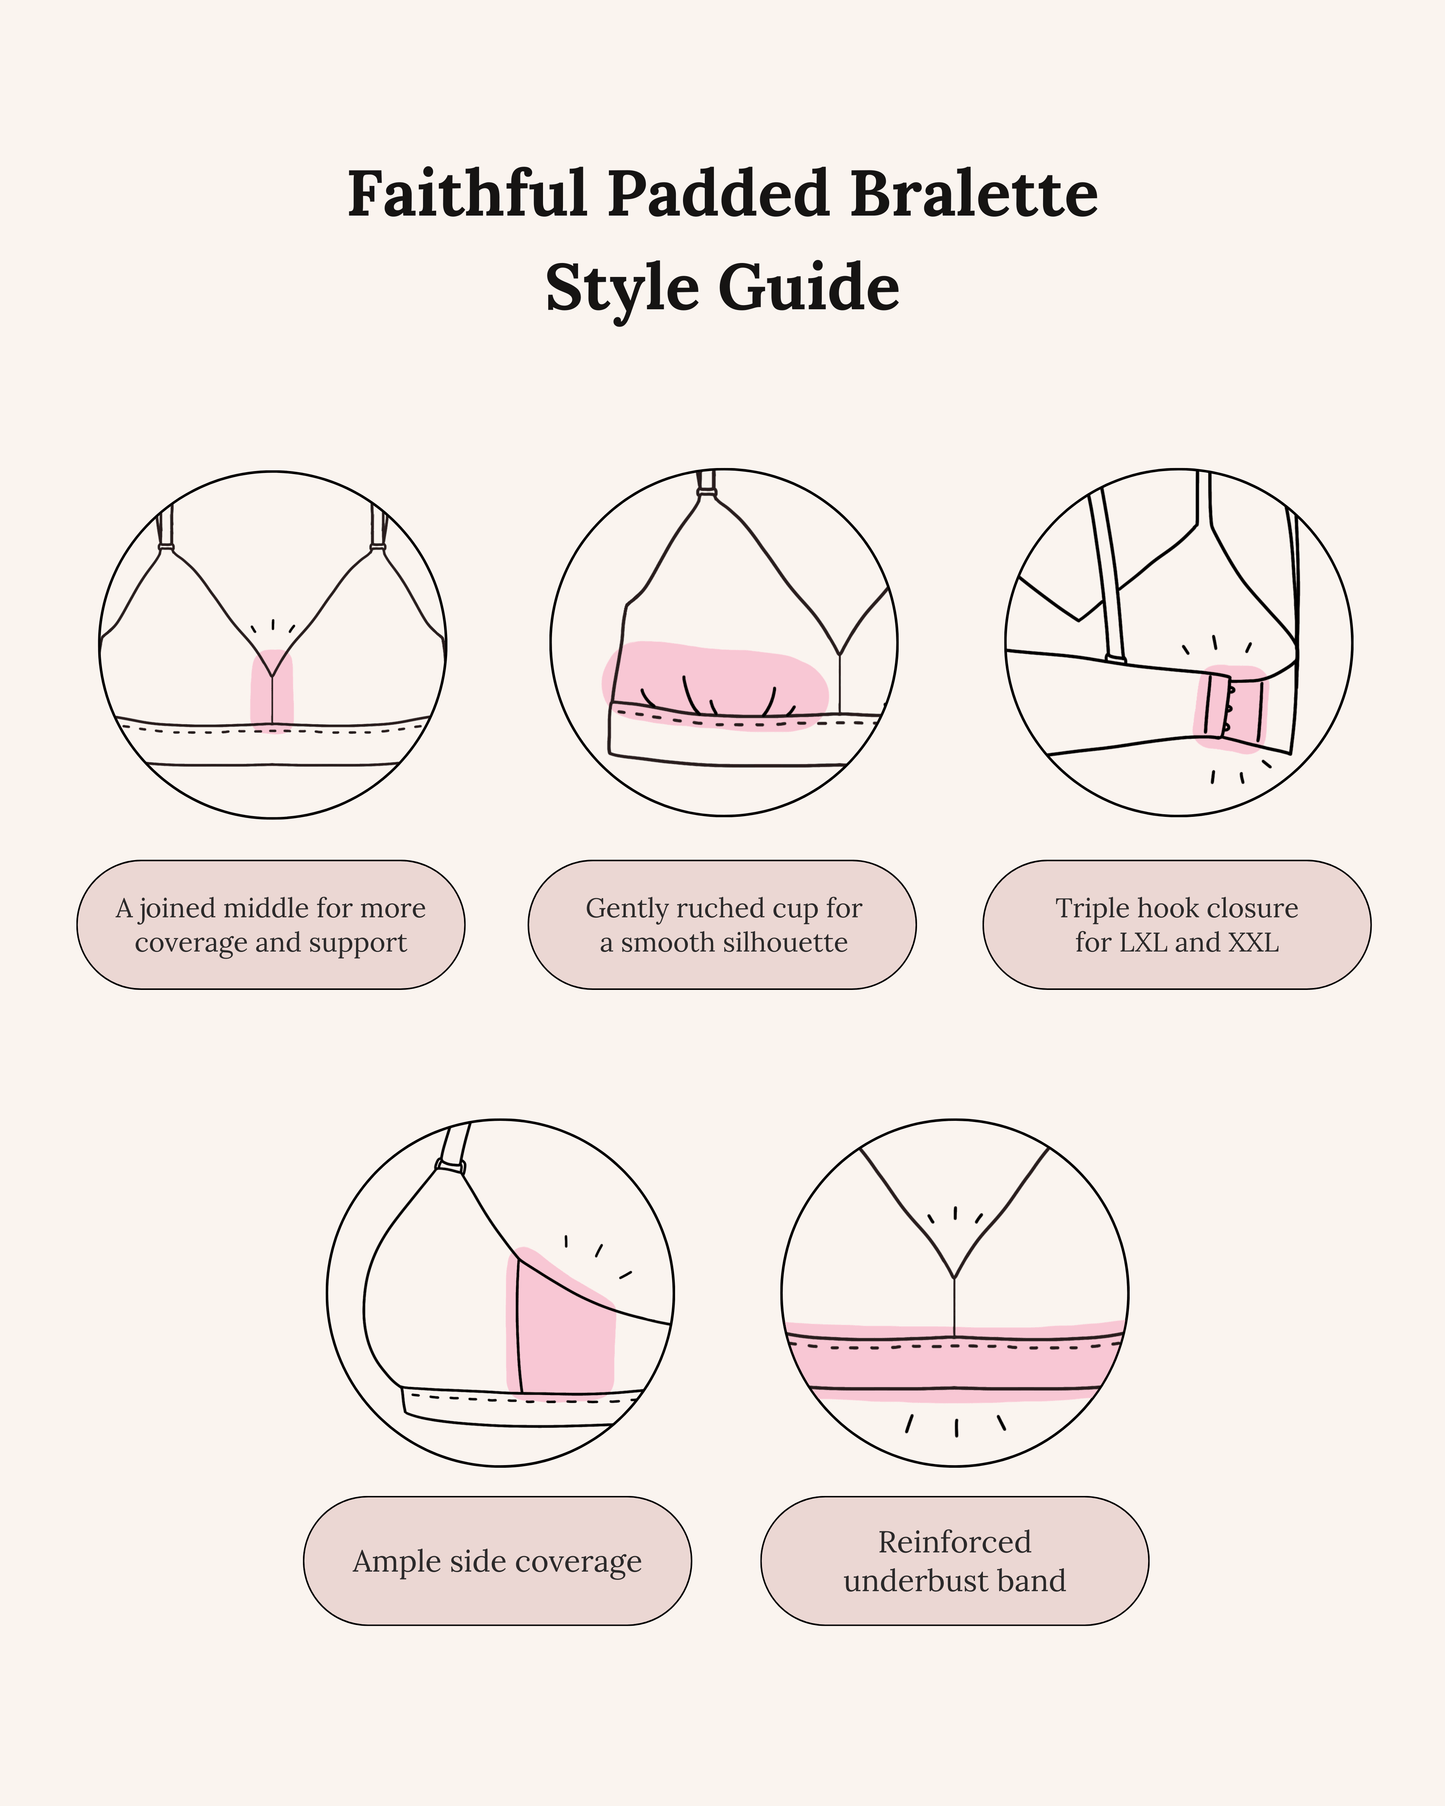 elevated basics faithful padded bralette in #14 – Our Bralette Club